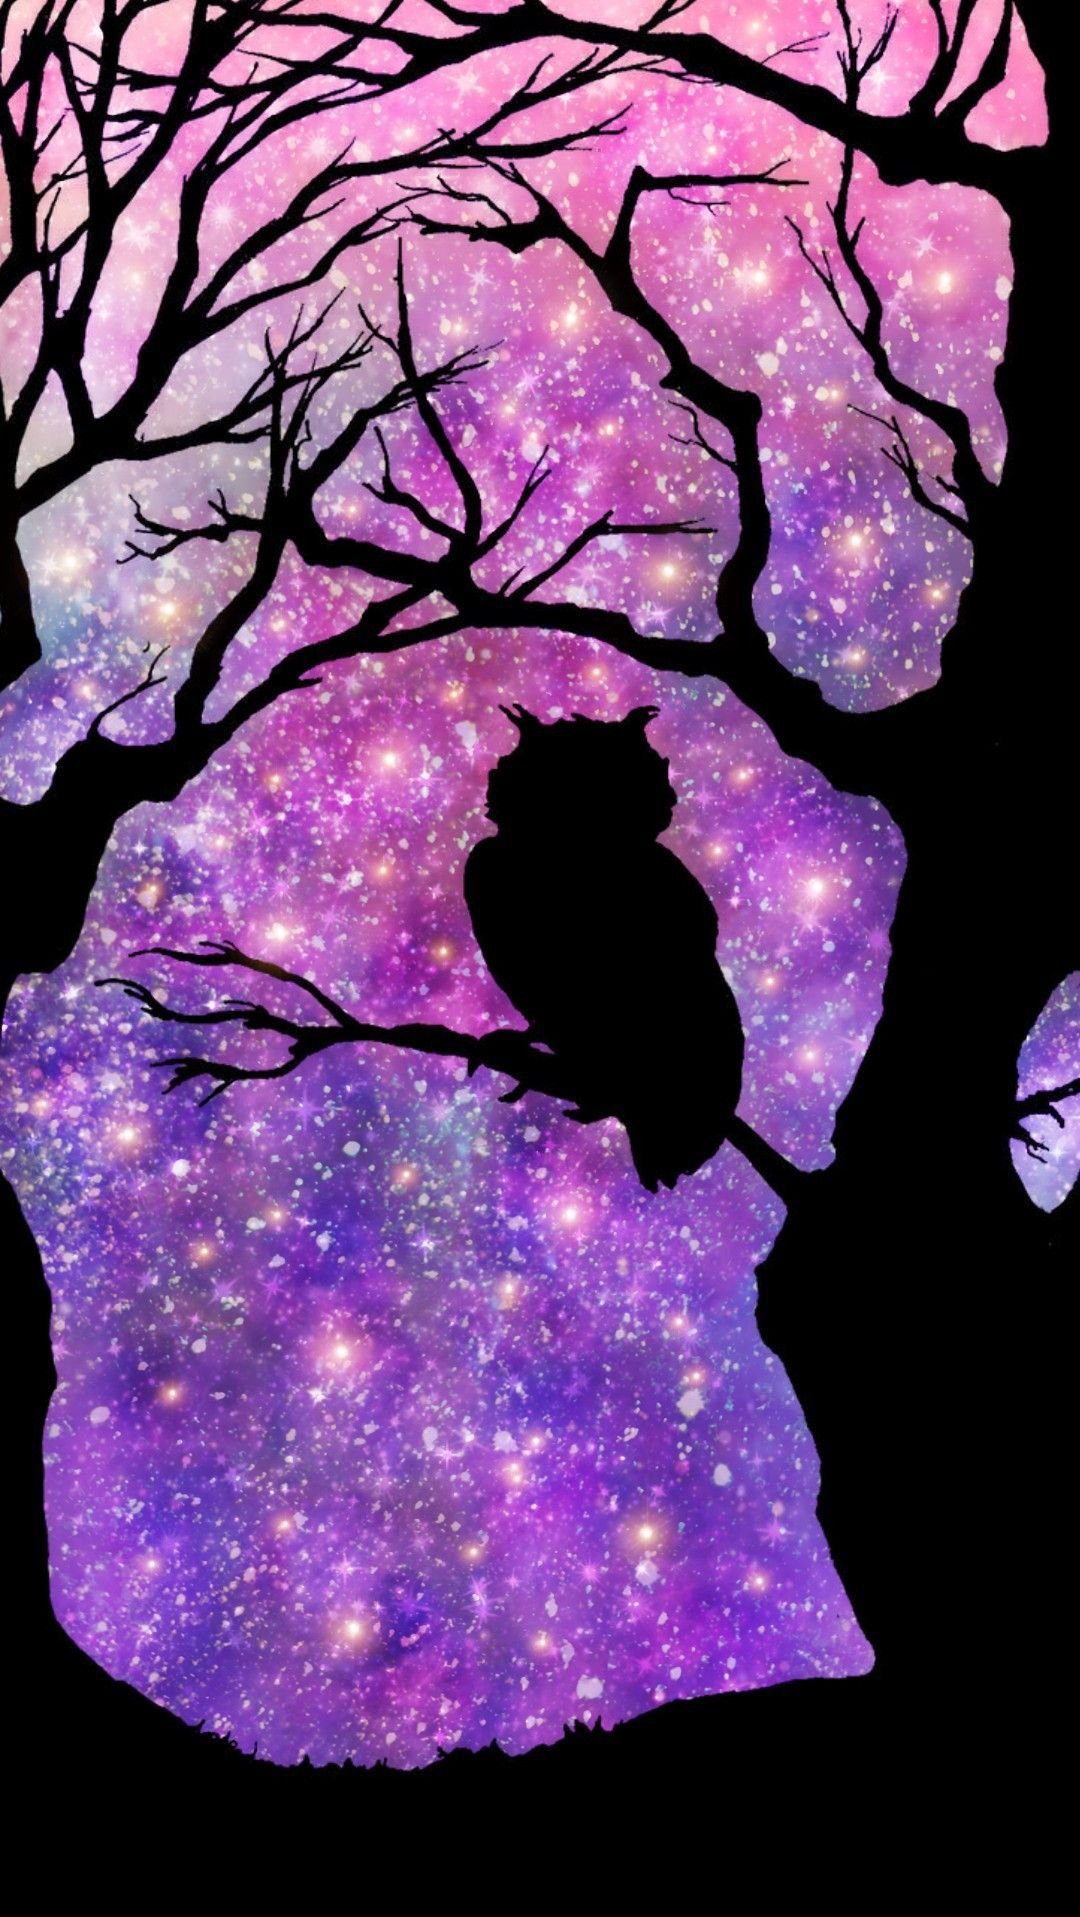 Galaxy night sky owl